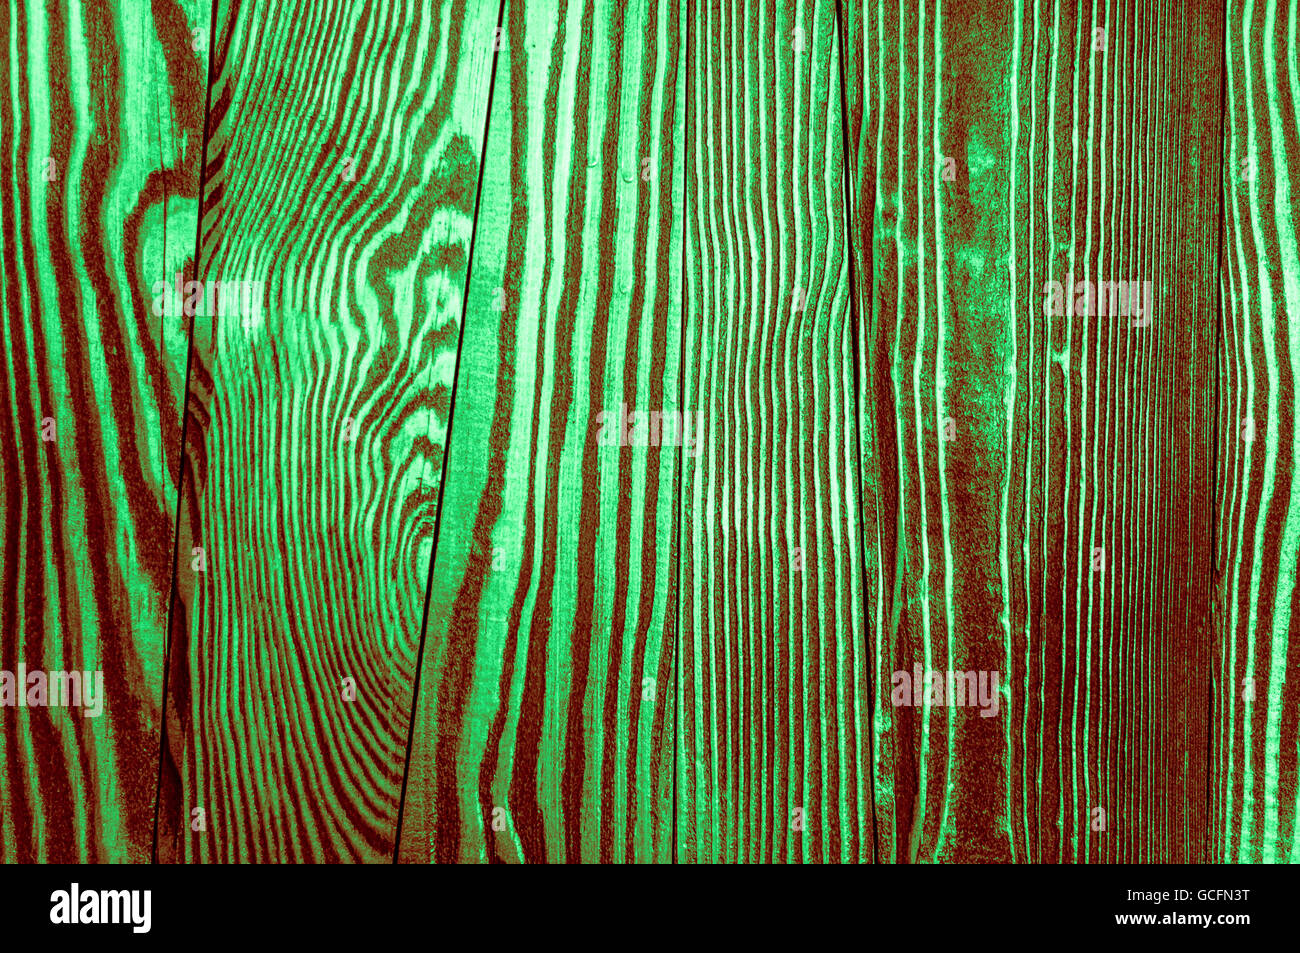 Perfect light dark green reddish greenish irregular old and rough wood timber surface texture background Stock Photo